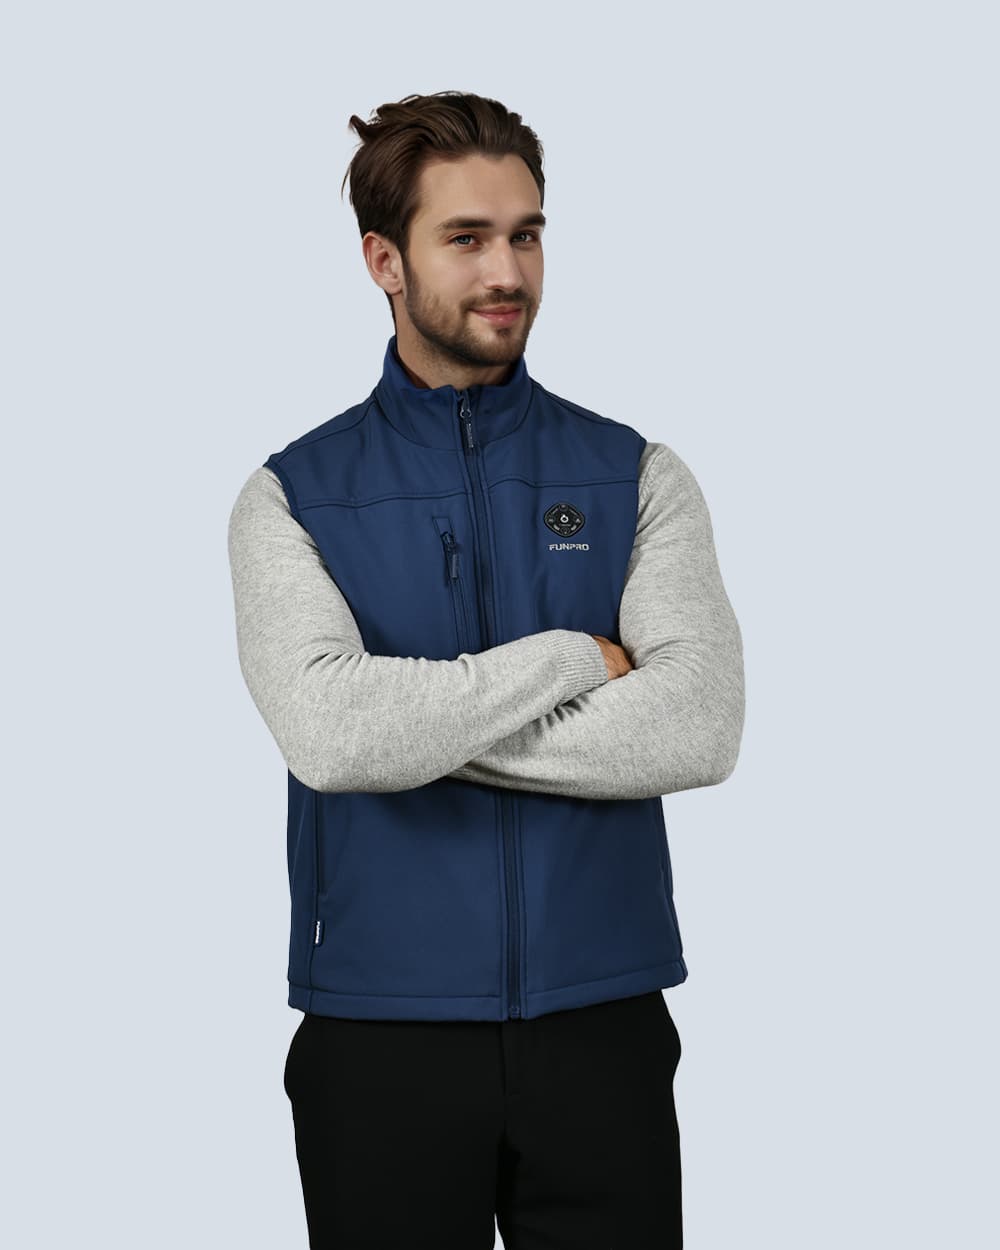 FUNPRO Men's Composite Heated Vest(Without Battery) Large / Blue